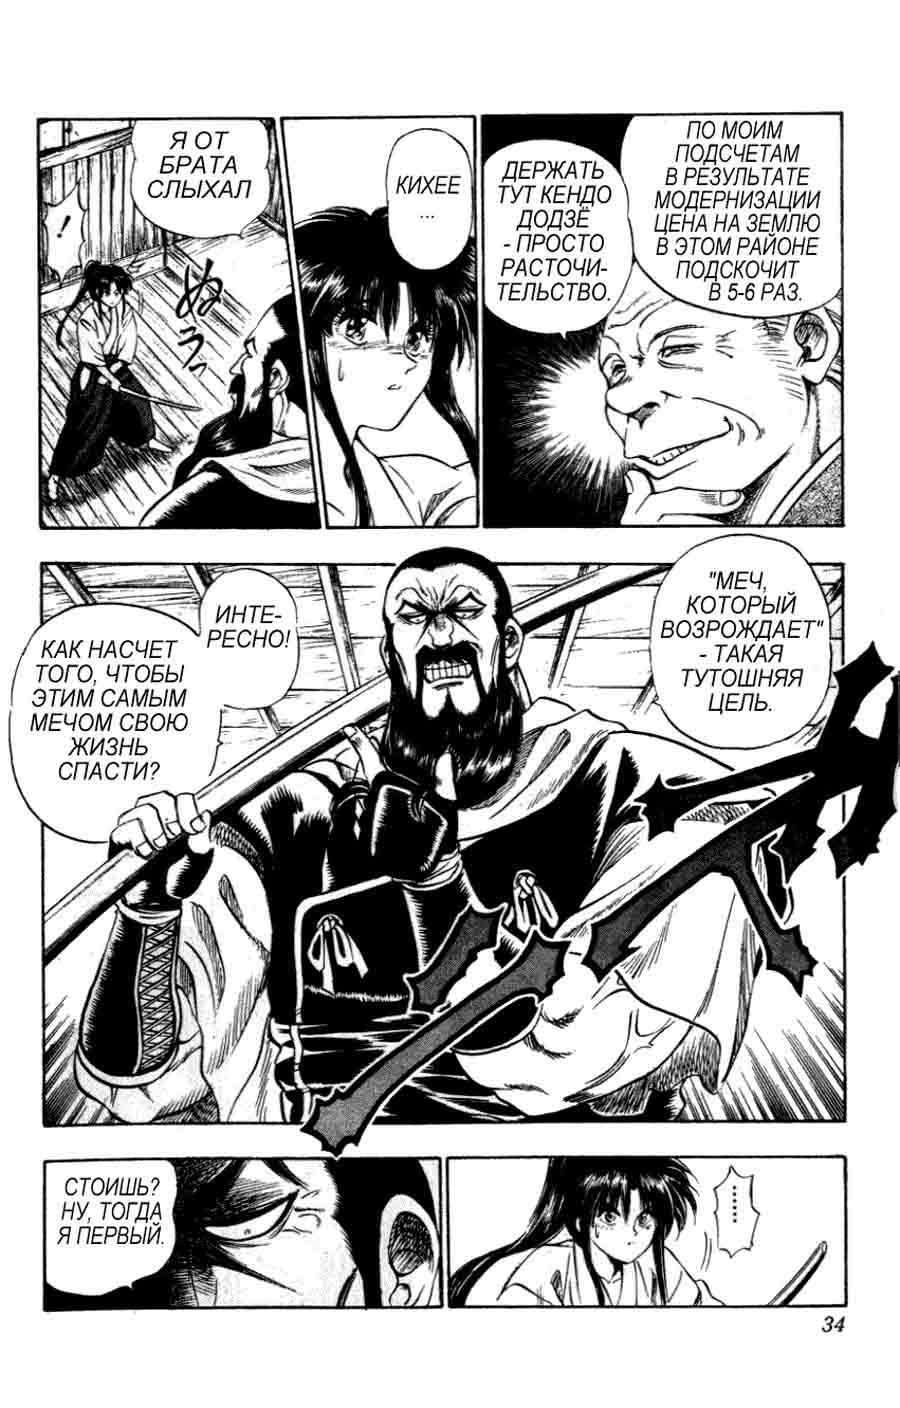 Rurouni Kenshin (Samurai X/ ) -   ></a>
<script language=JavaScript> 
  var txt = 